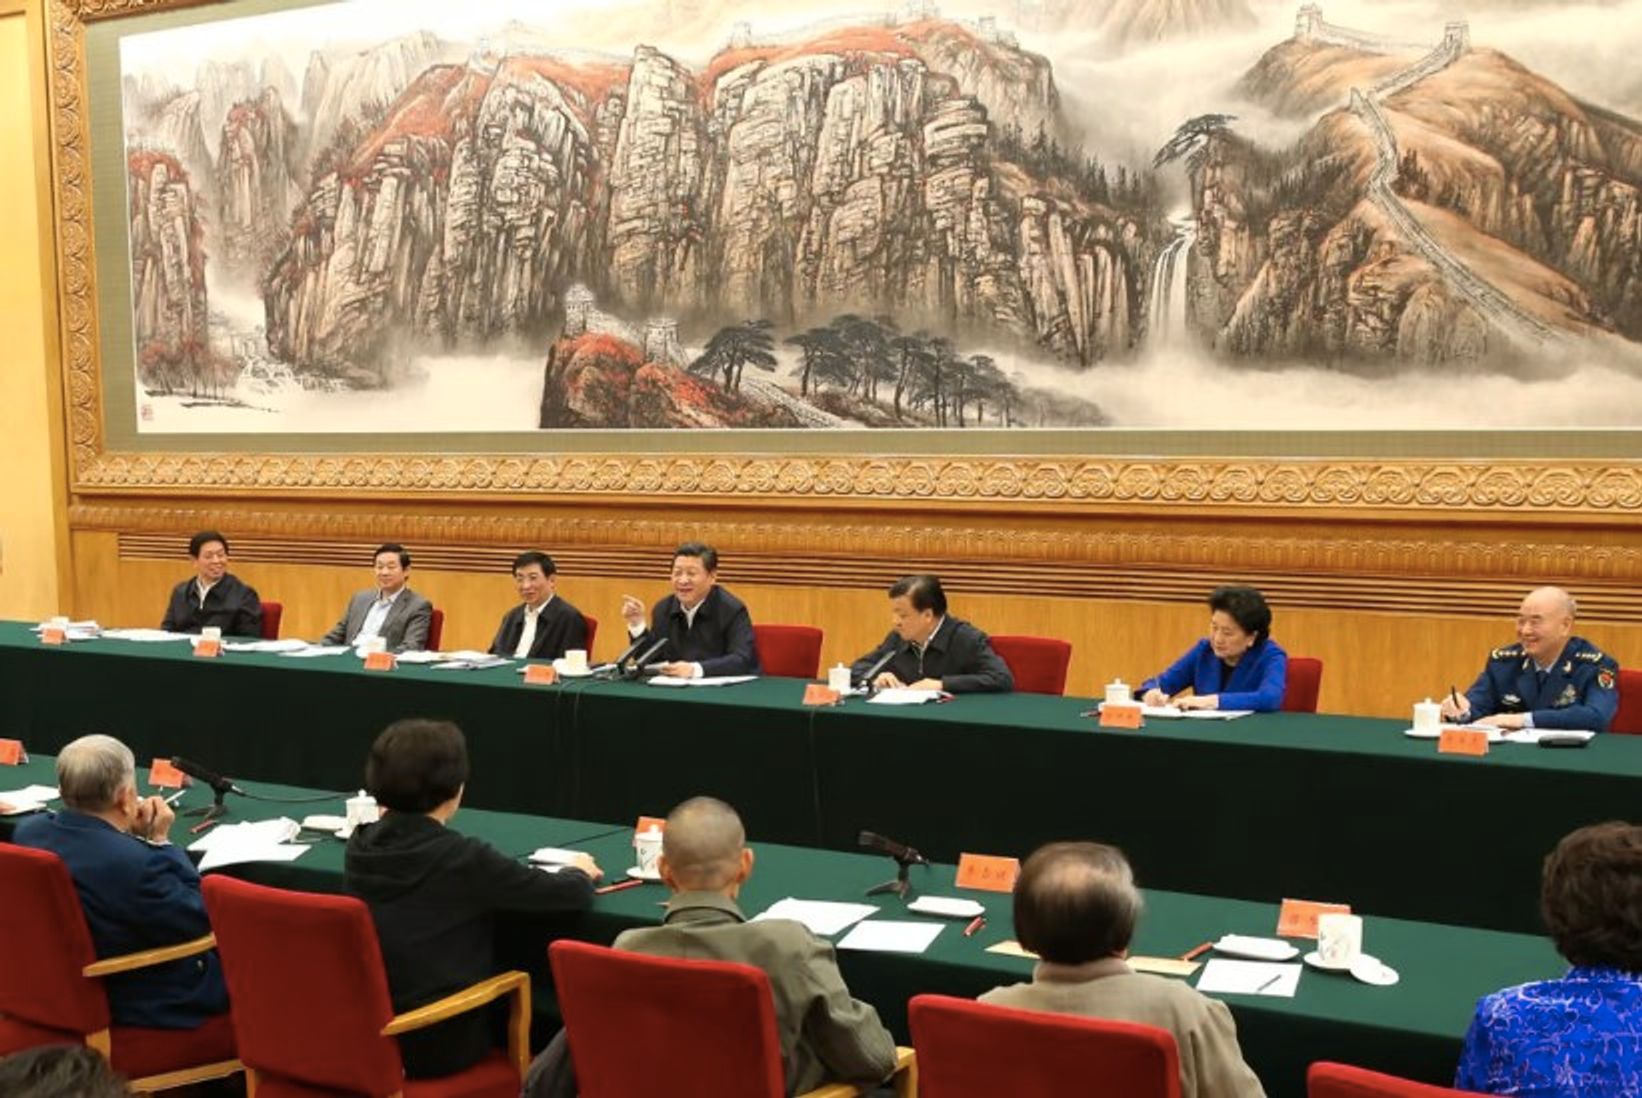 President Xi Jinping at the 2016 symposium